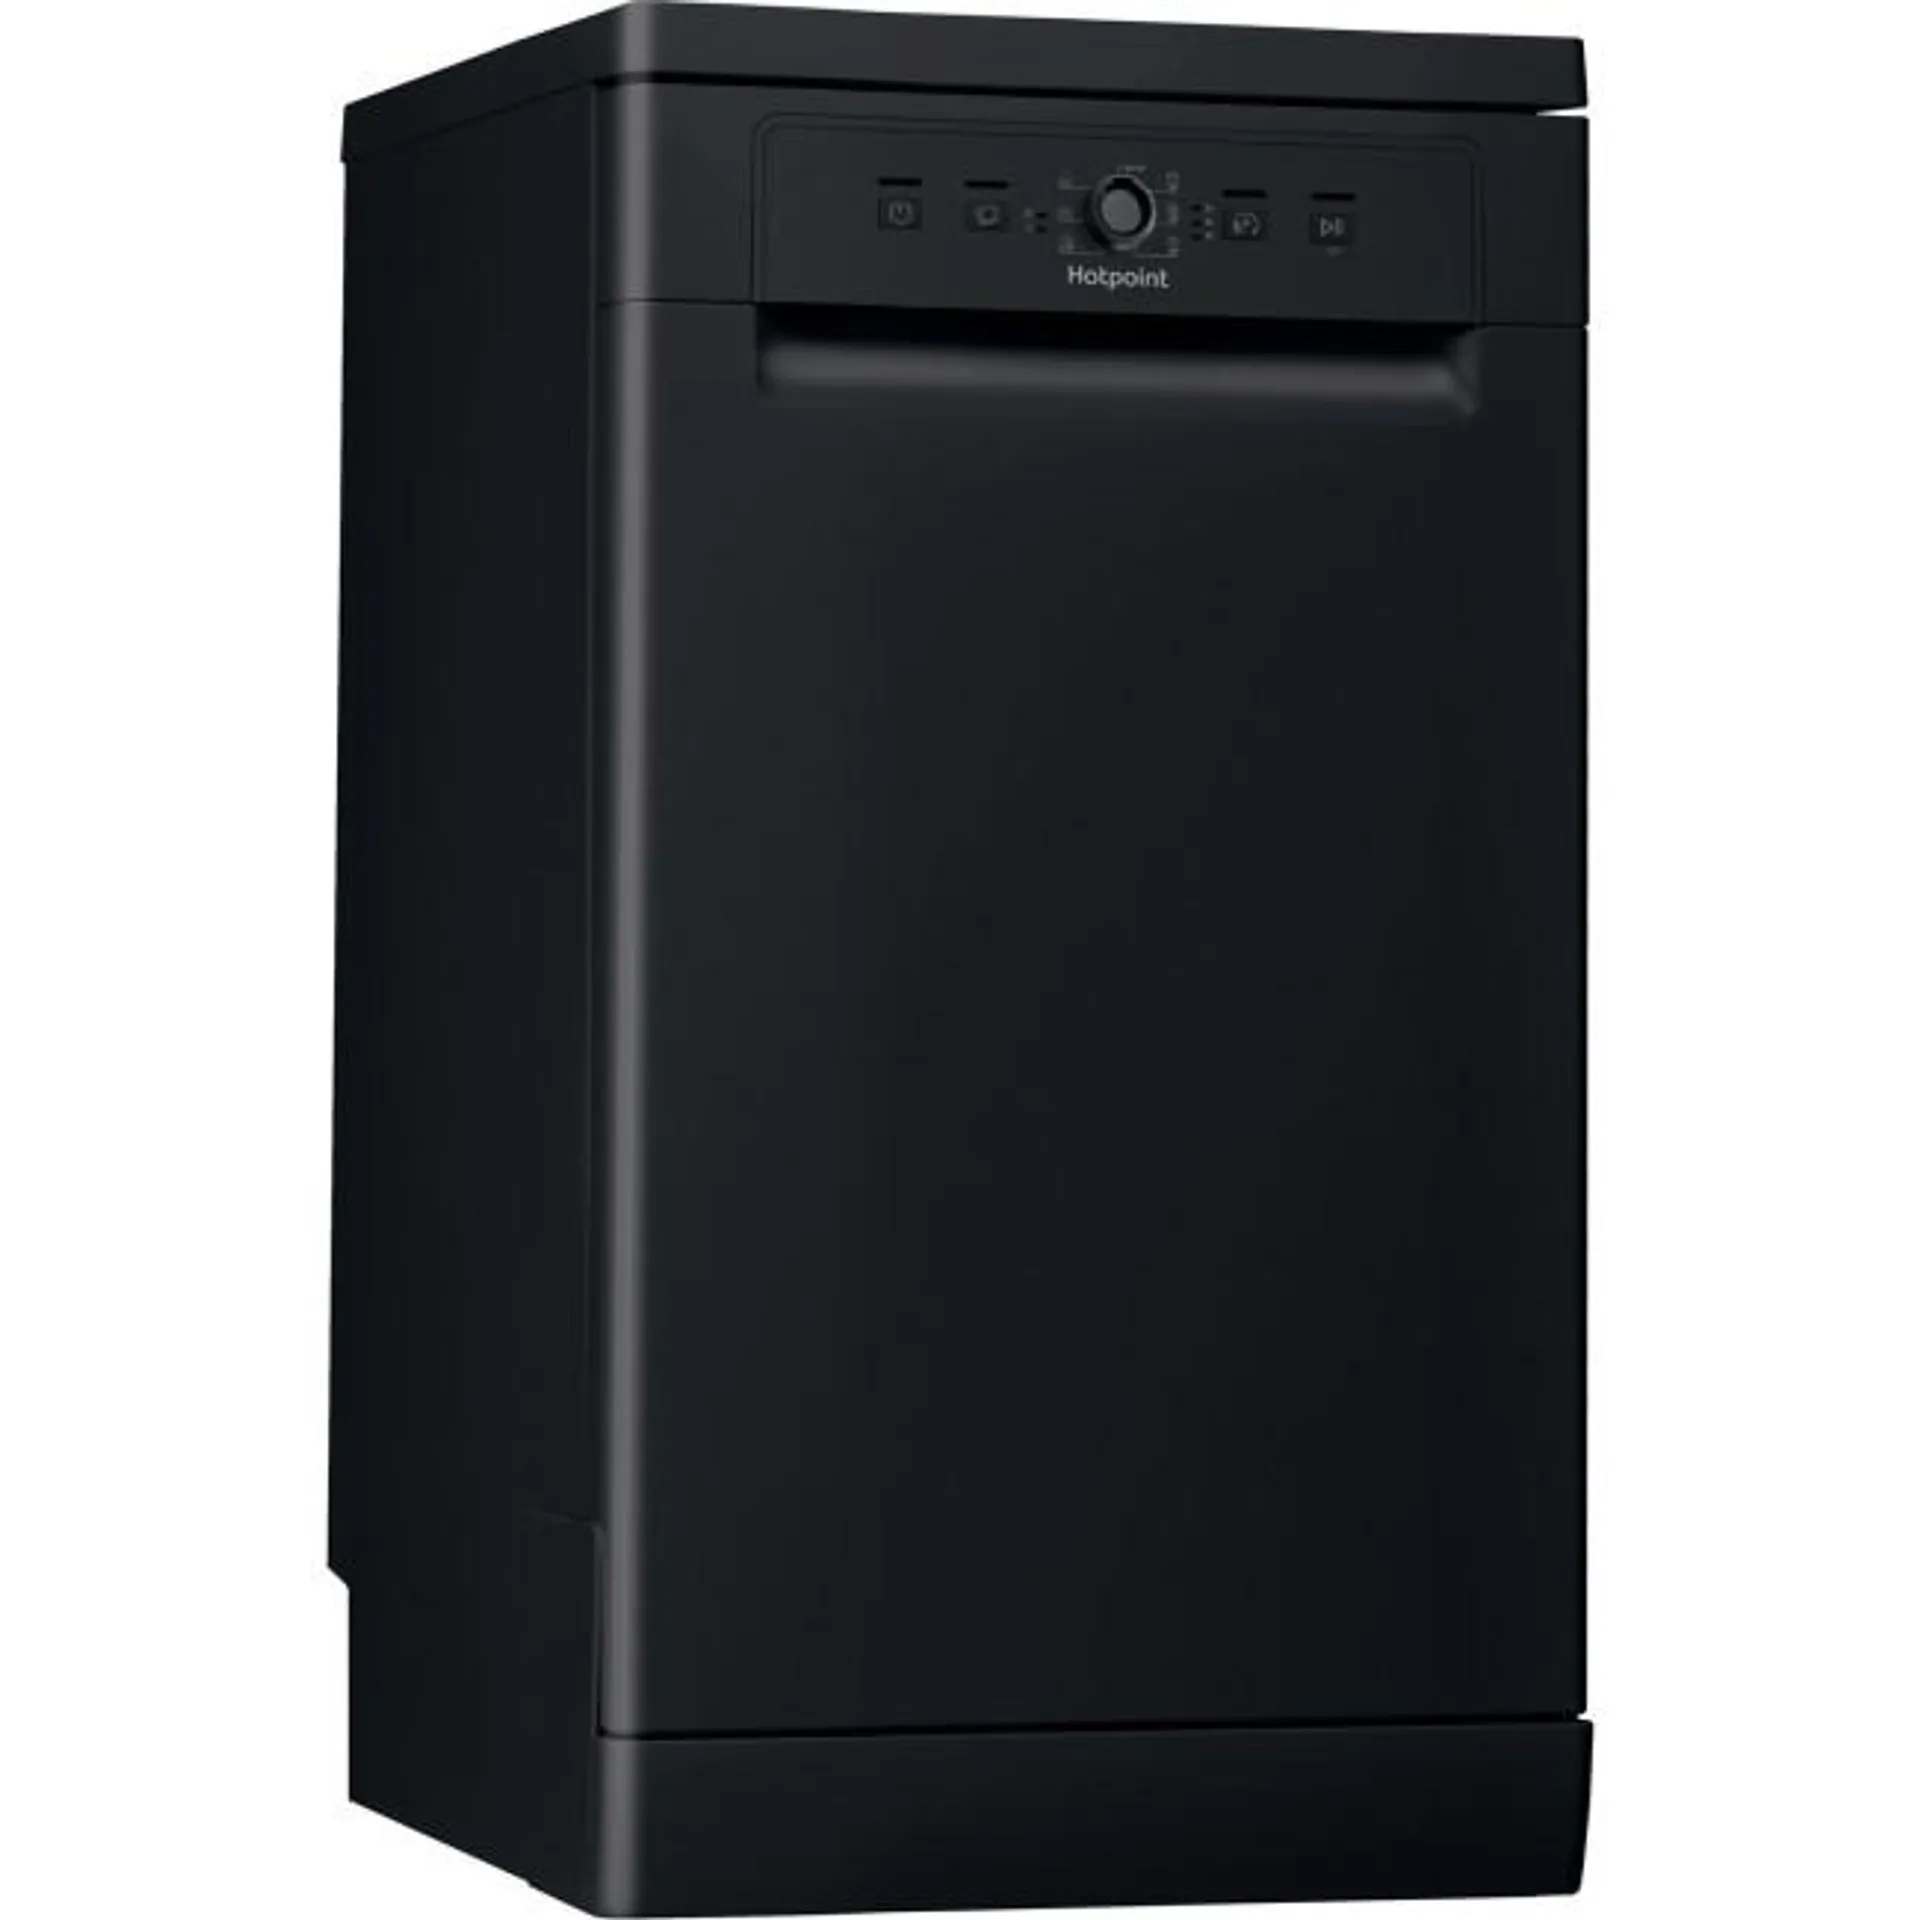 Hotpoint 10 Place Settings Freestanding Dishwasher - Black